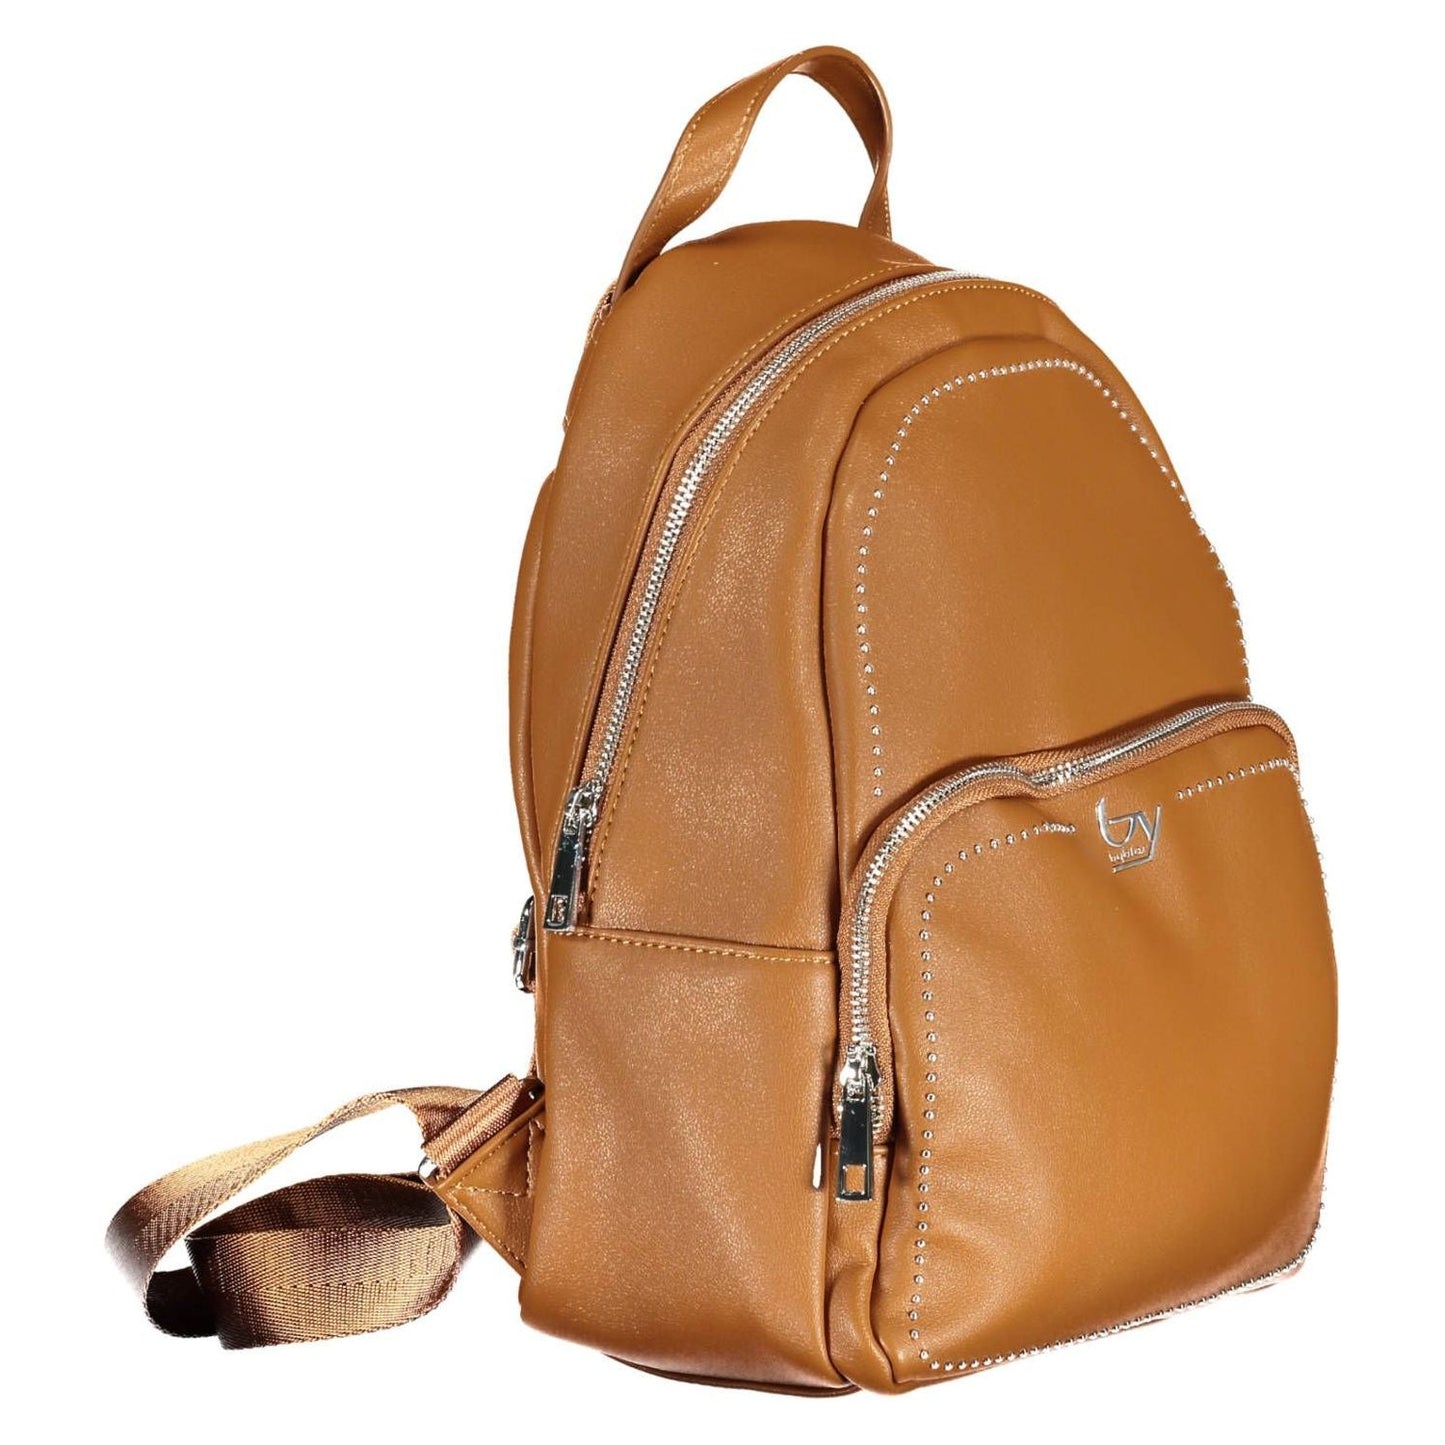 BYBLOS Elegant Brown Backpack with Contrasting Details elegant-brown-backpack-with-contrasting-details